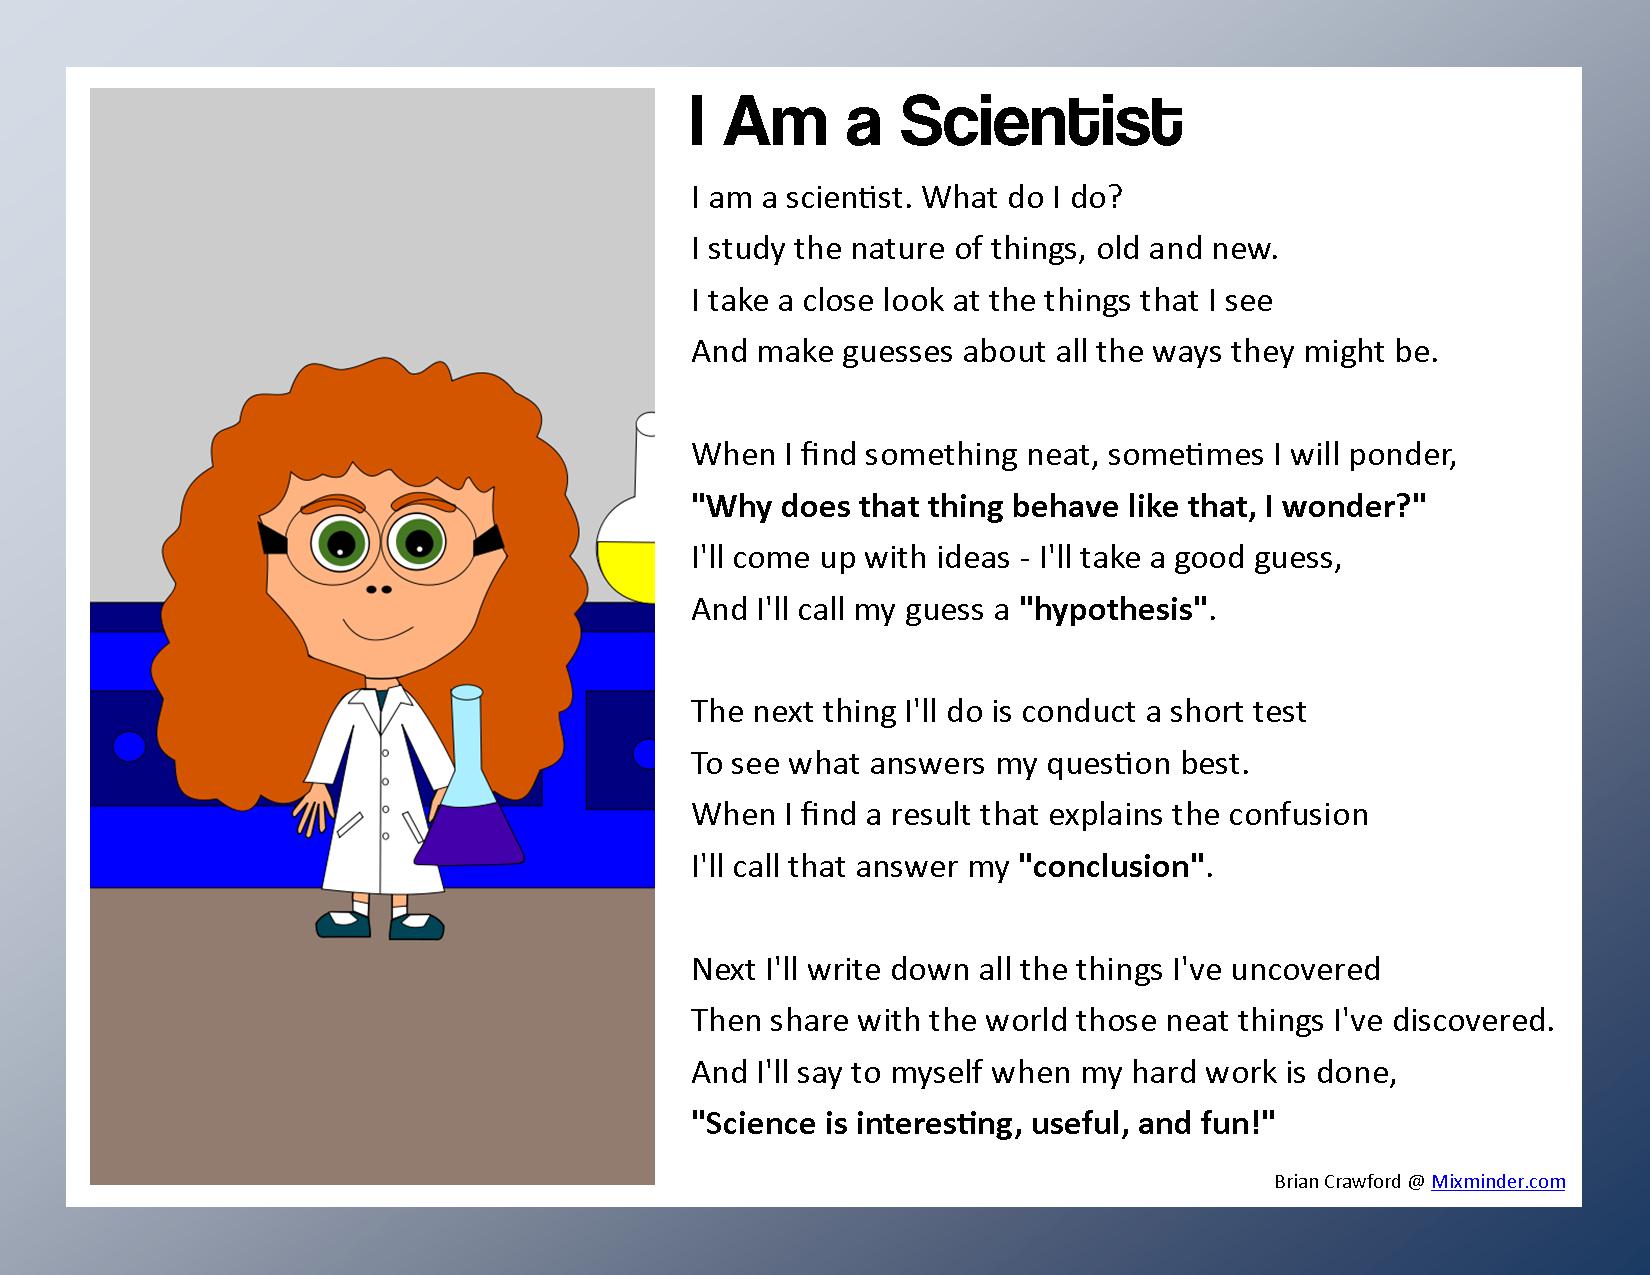 “I Am a Scientist” Poem